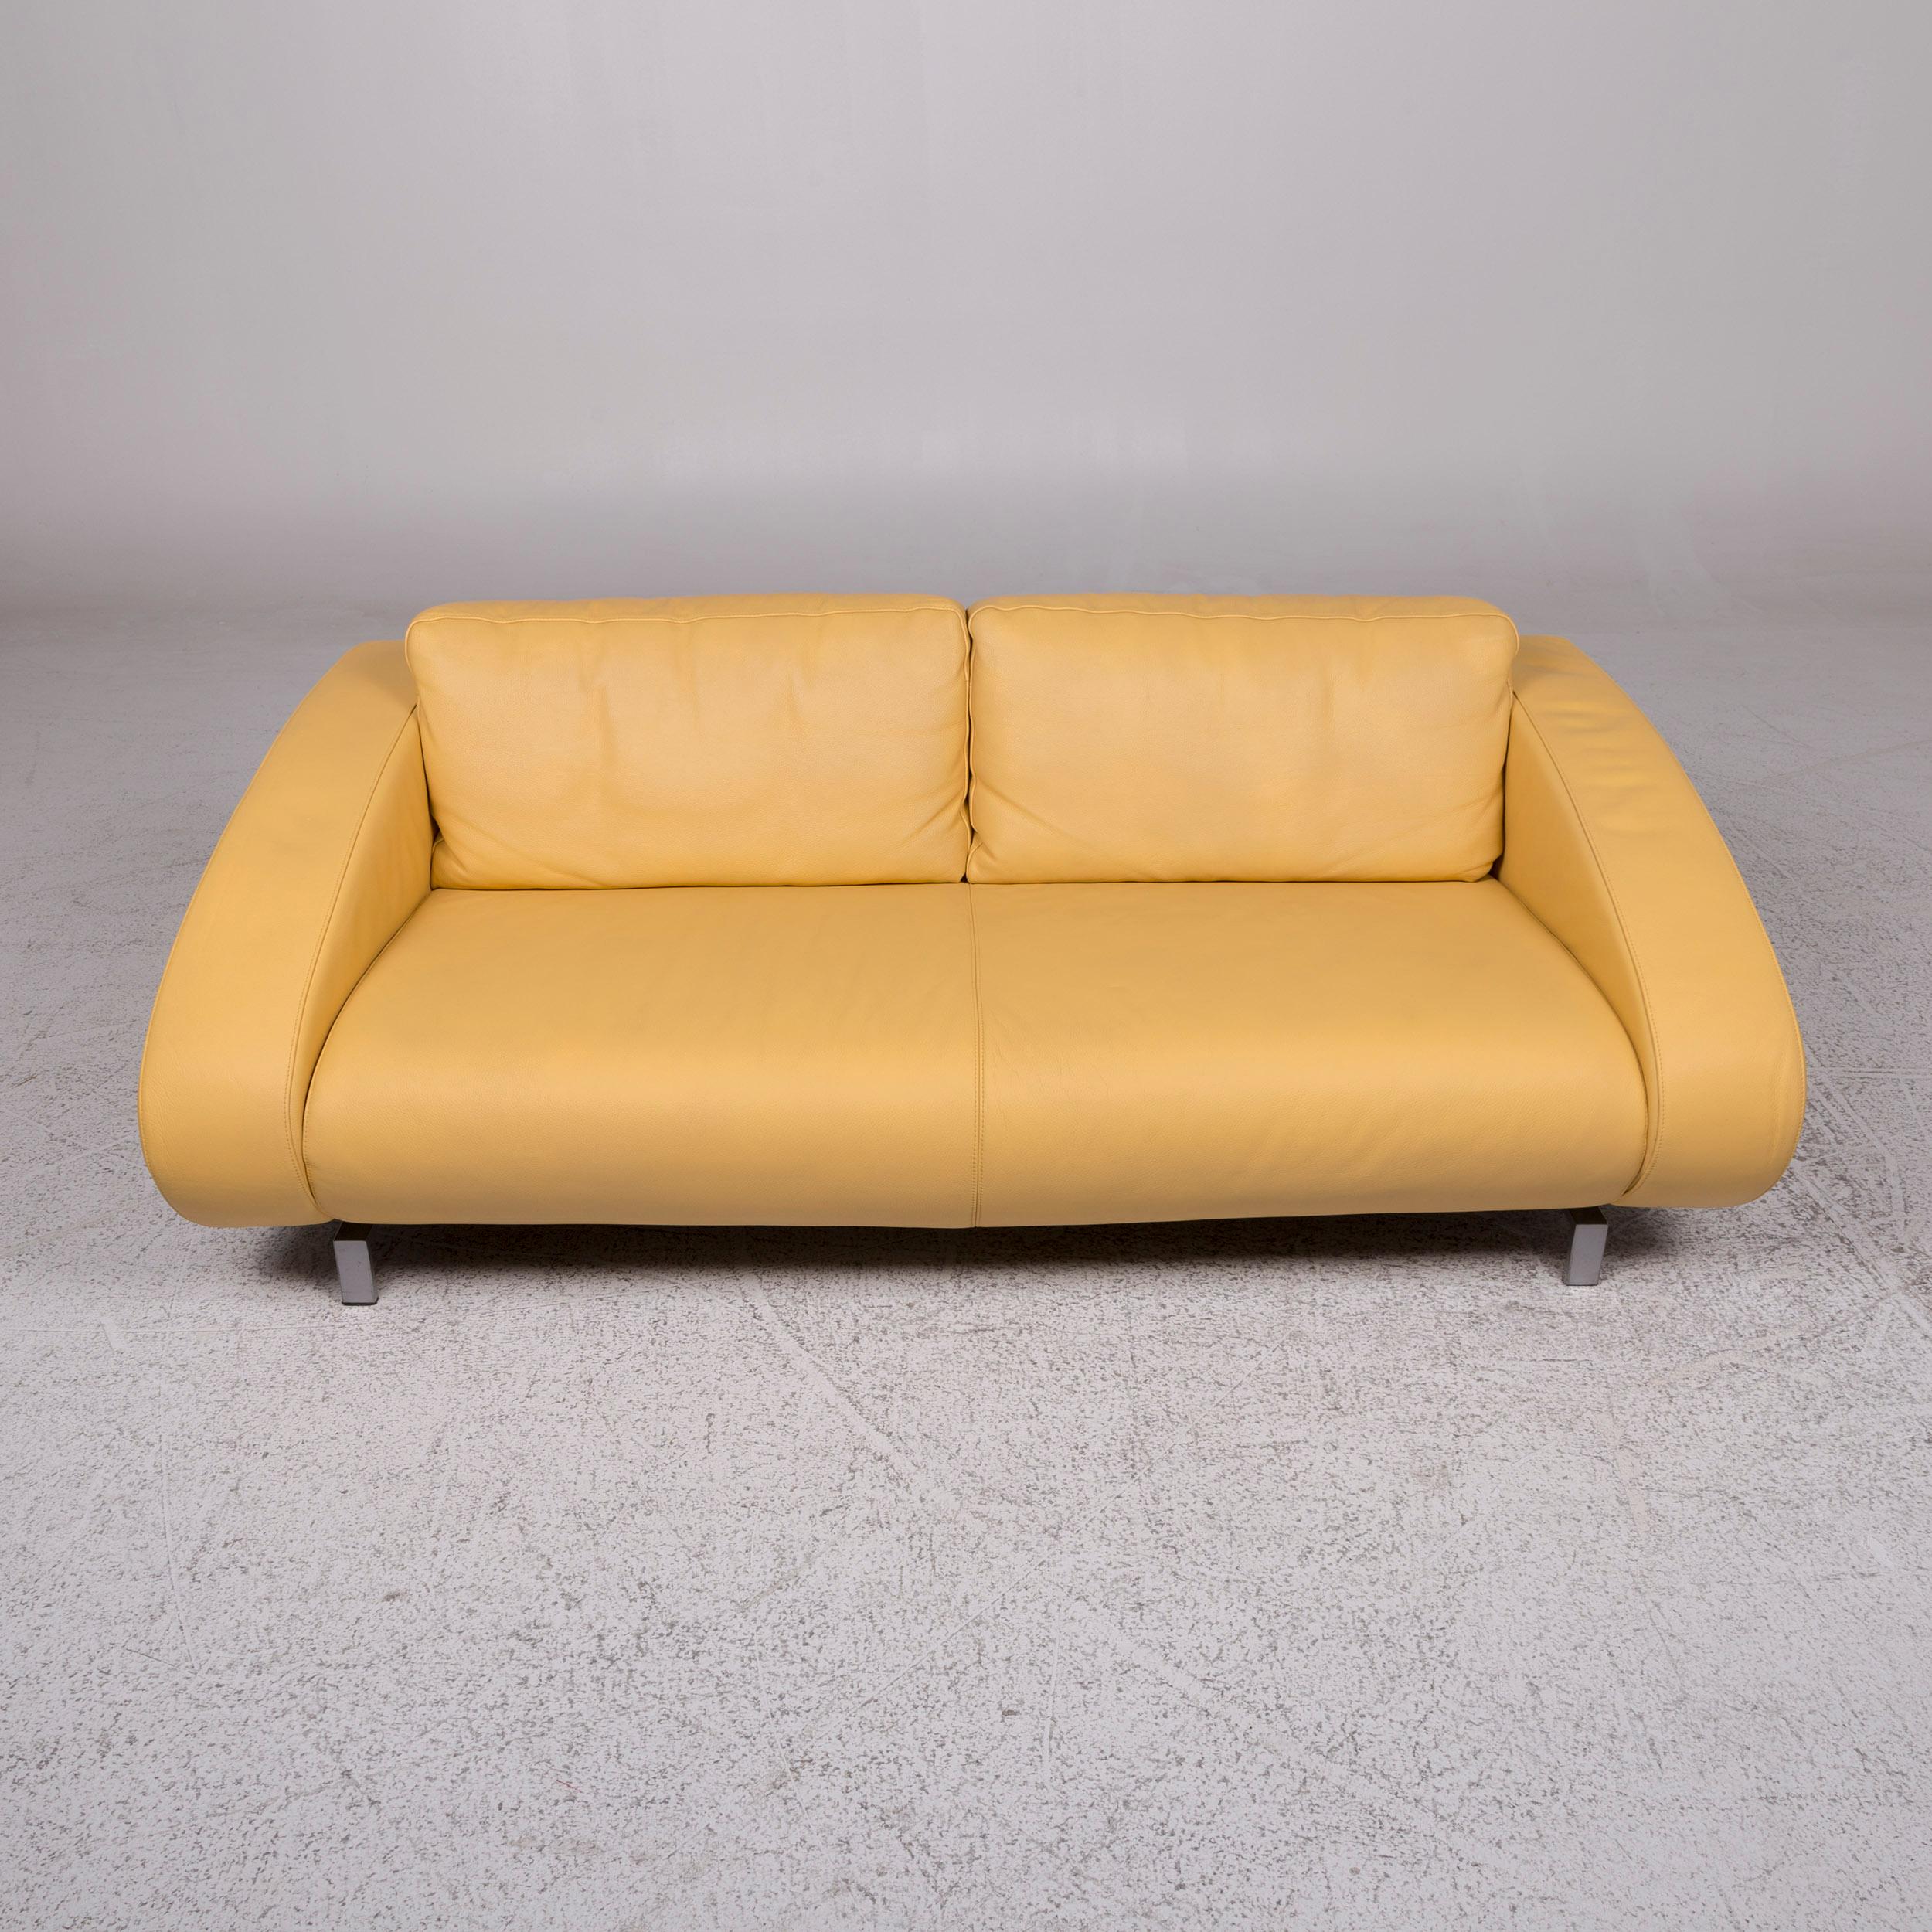 Bosnian Machalke Leather Sofa Yellow Two-Seat